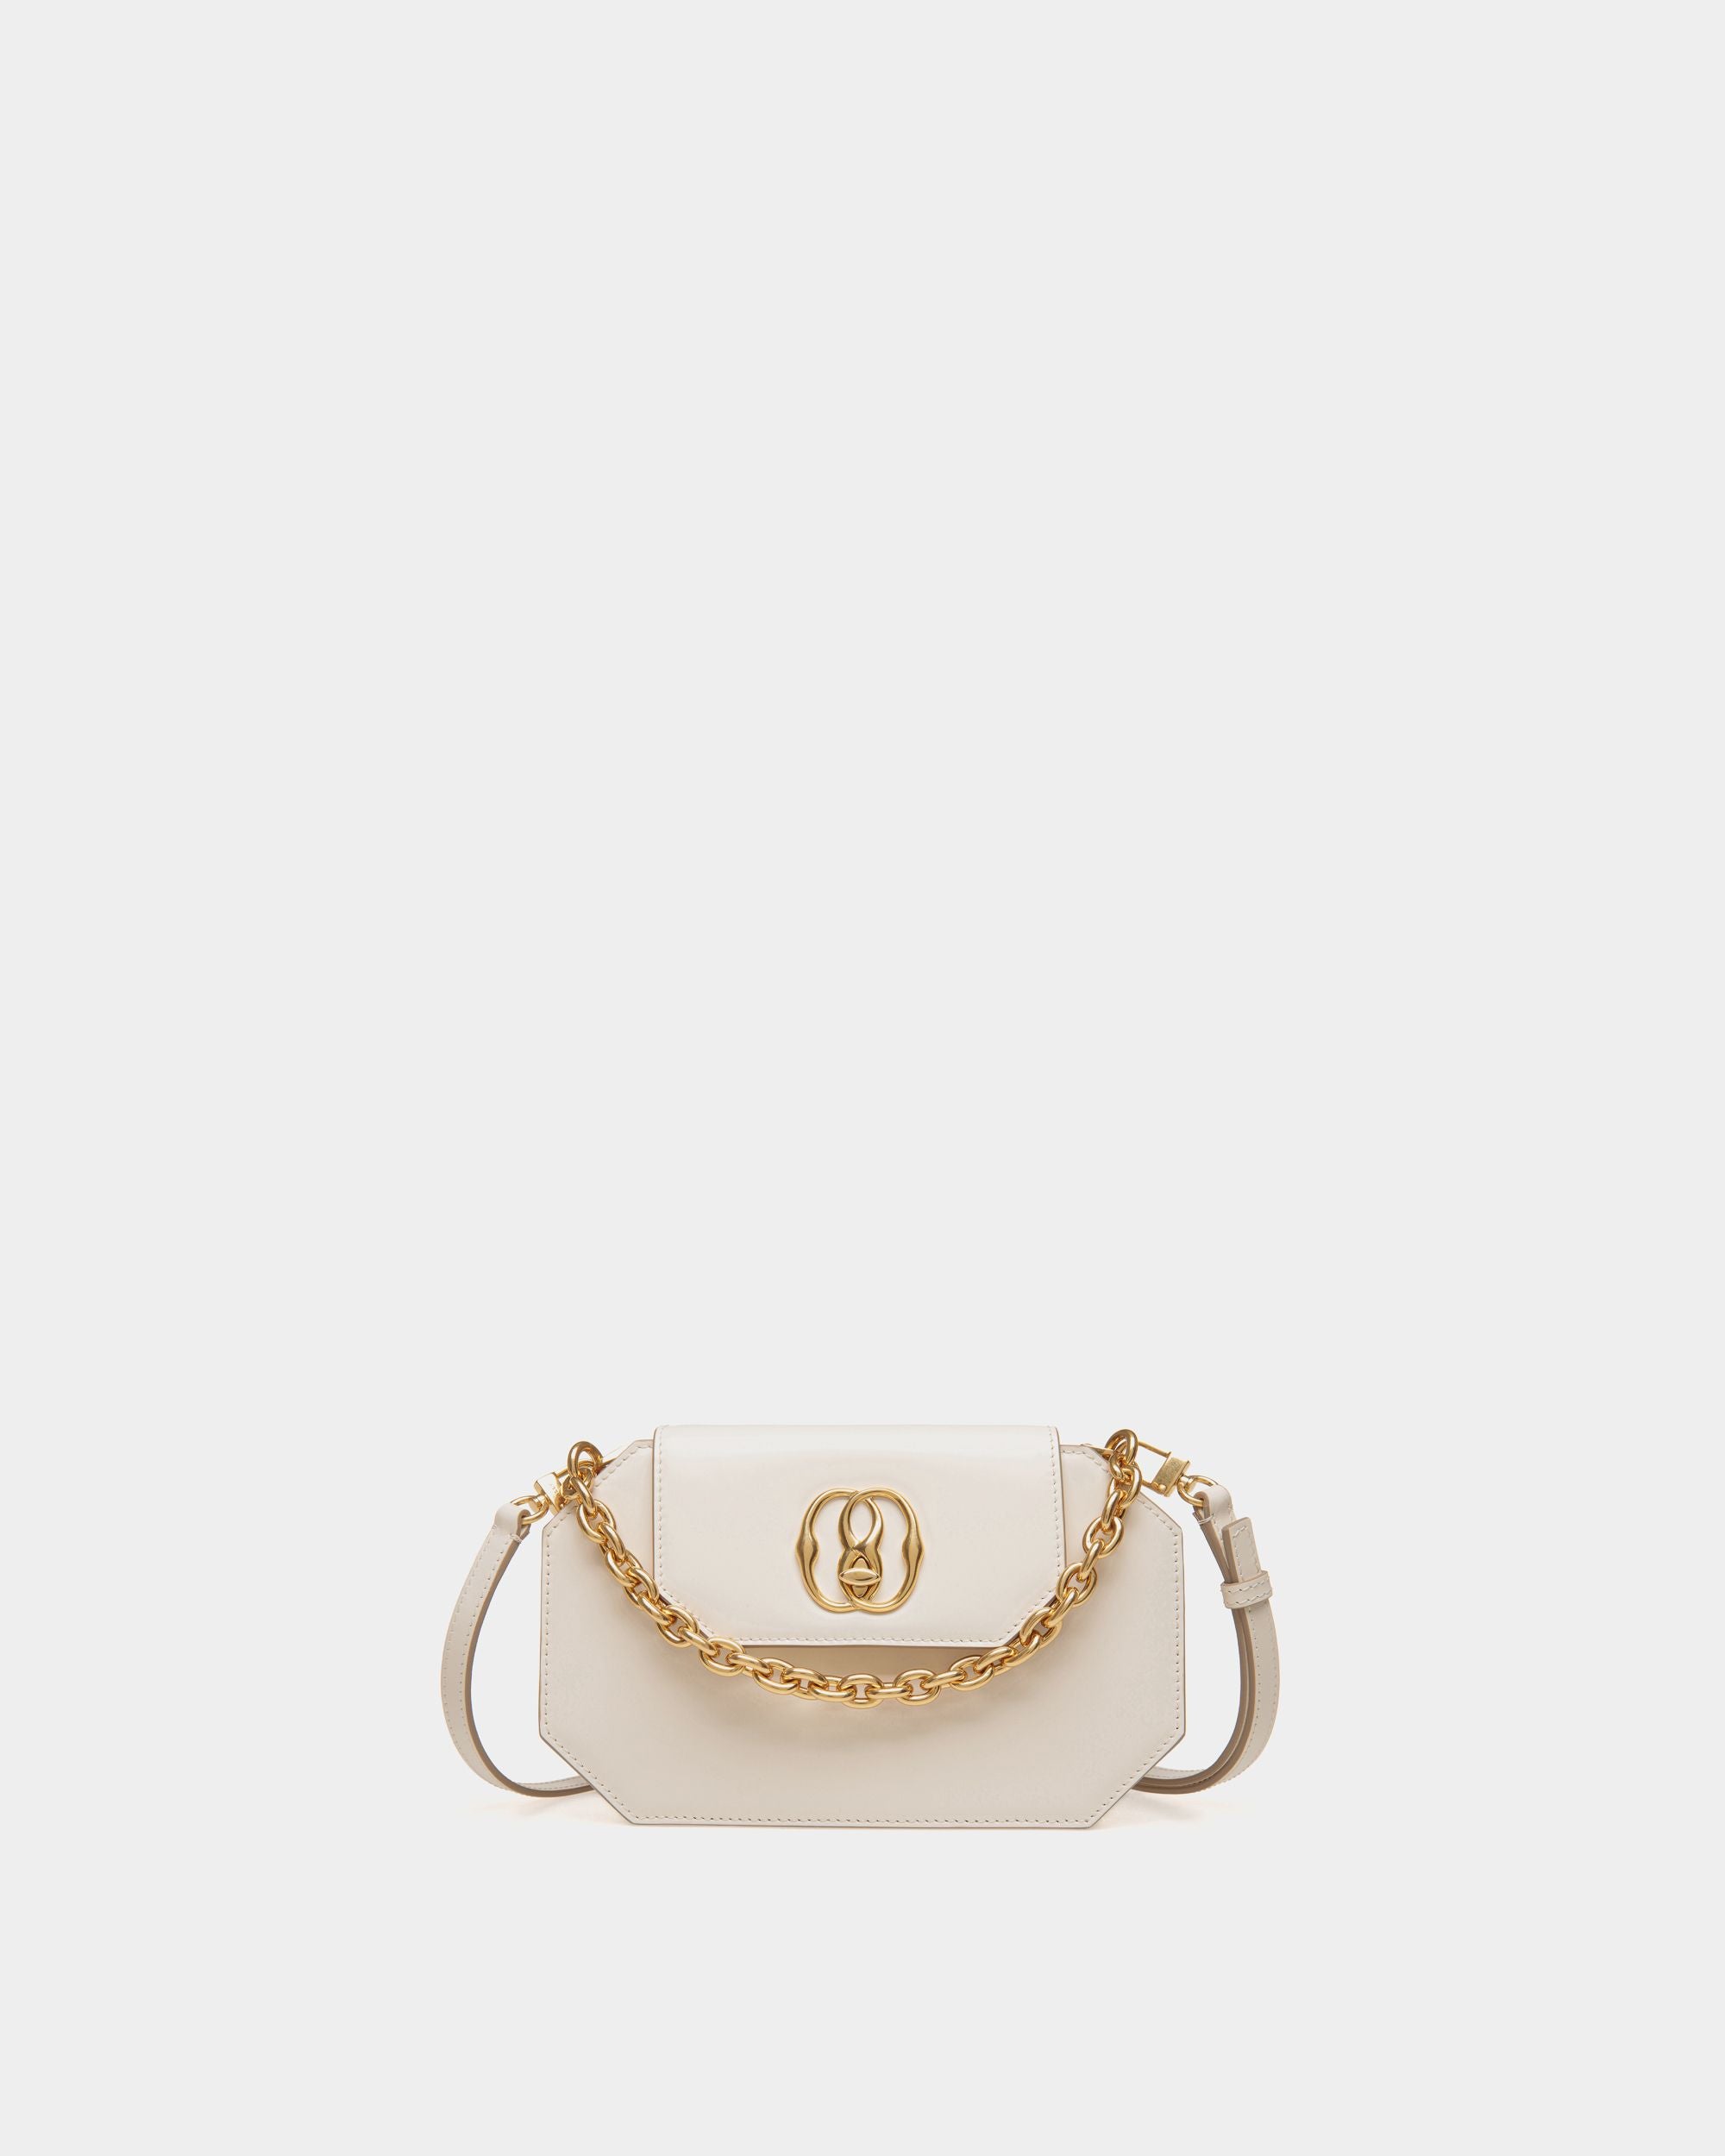 Emblem | Mini sac pour femme en cuir brossé blanc | Bally | Still Life Devant